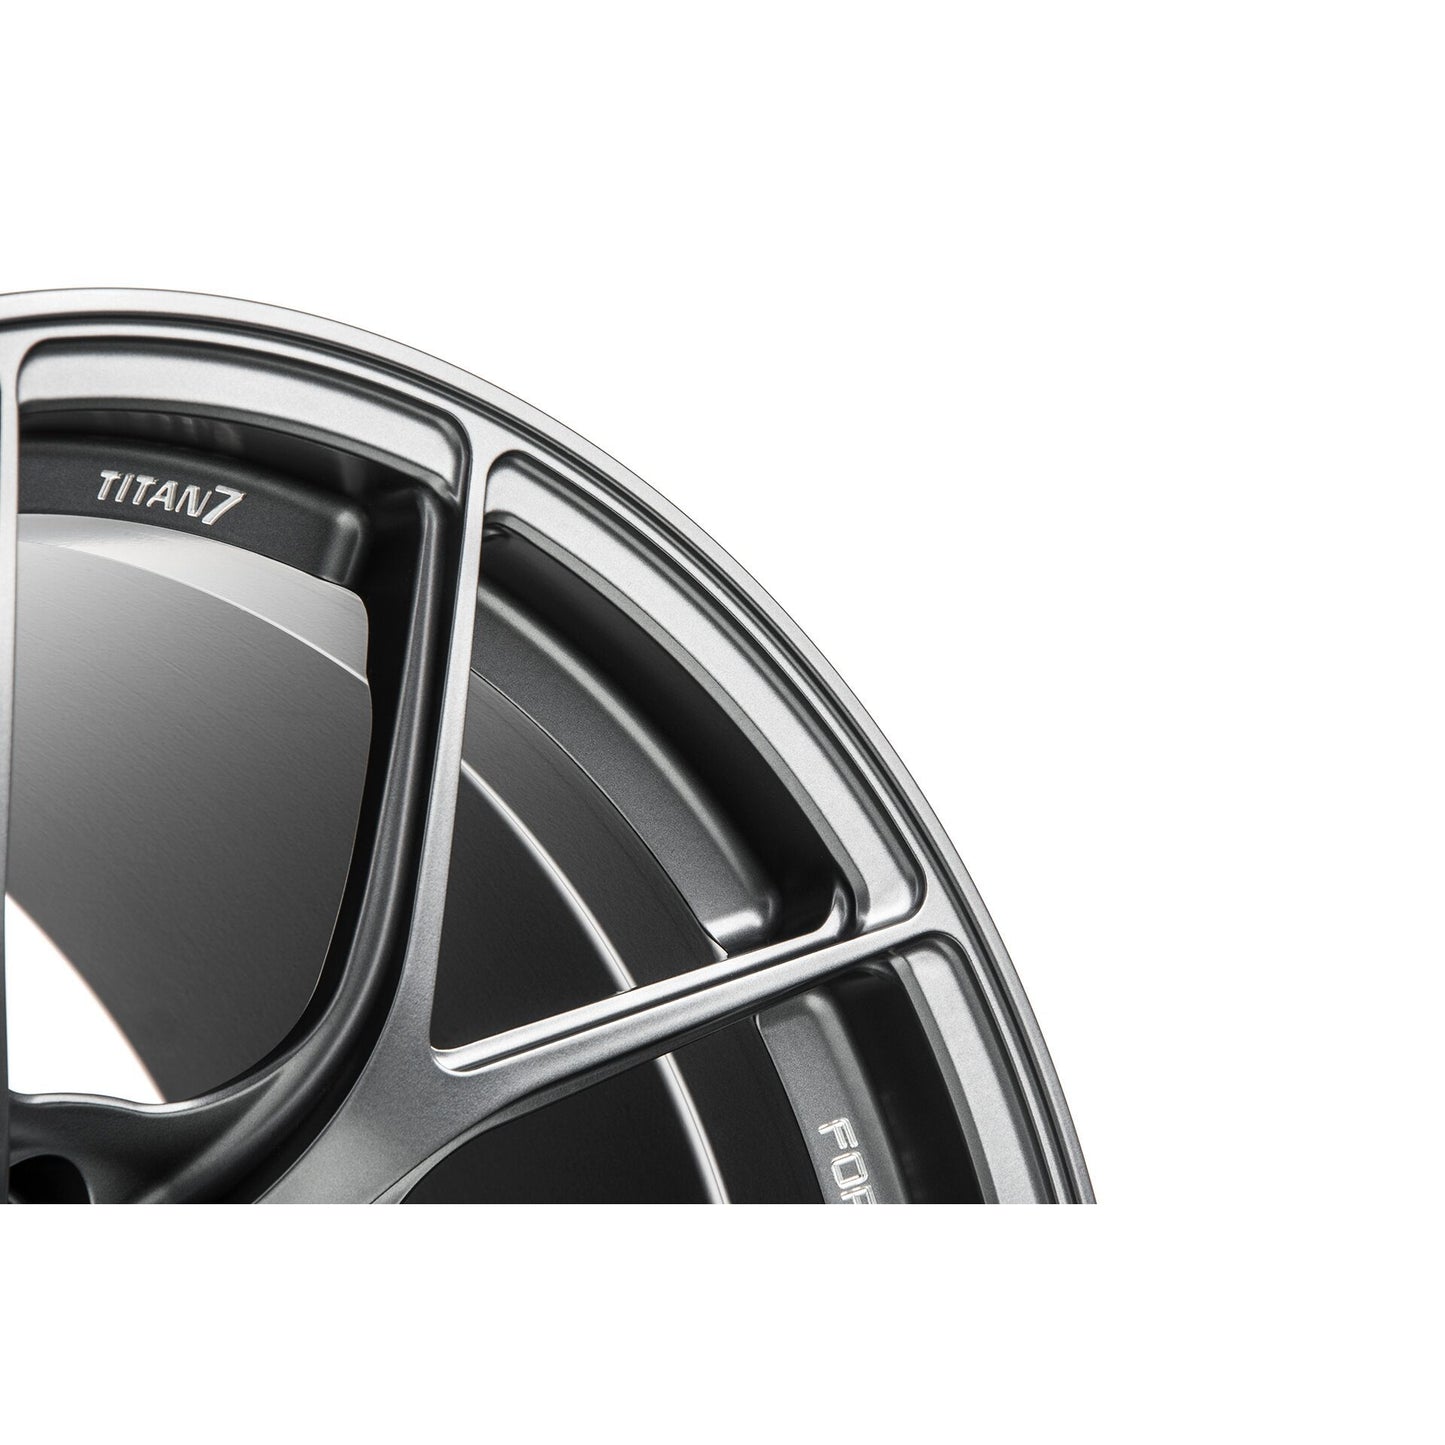 Titan 7 19 Inch T-S5 Forged Wheels - Satin Titanium for Toyota Supra A90-TS5-Supra-19-ST-Wheels-Titan 7-JDMuscle